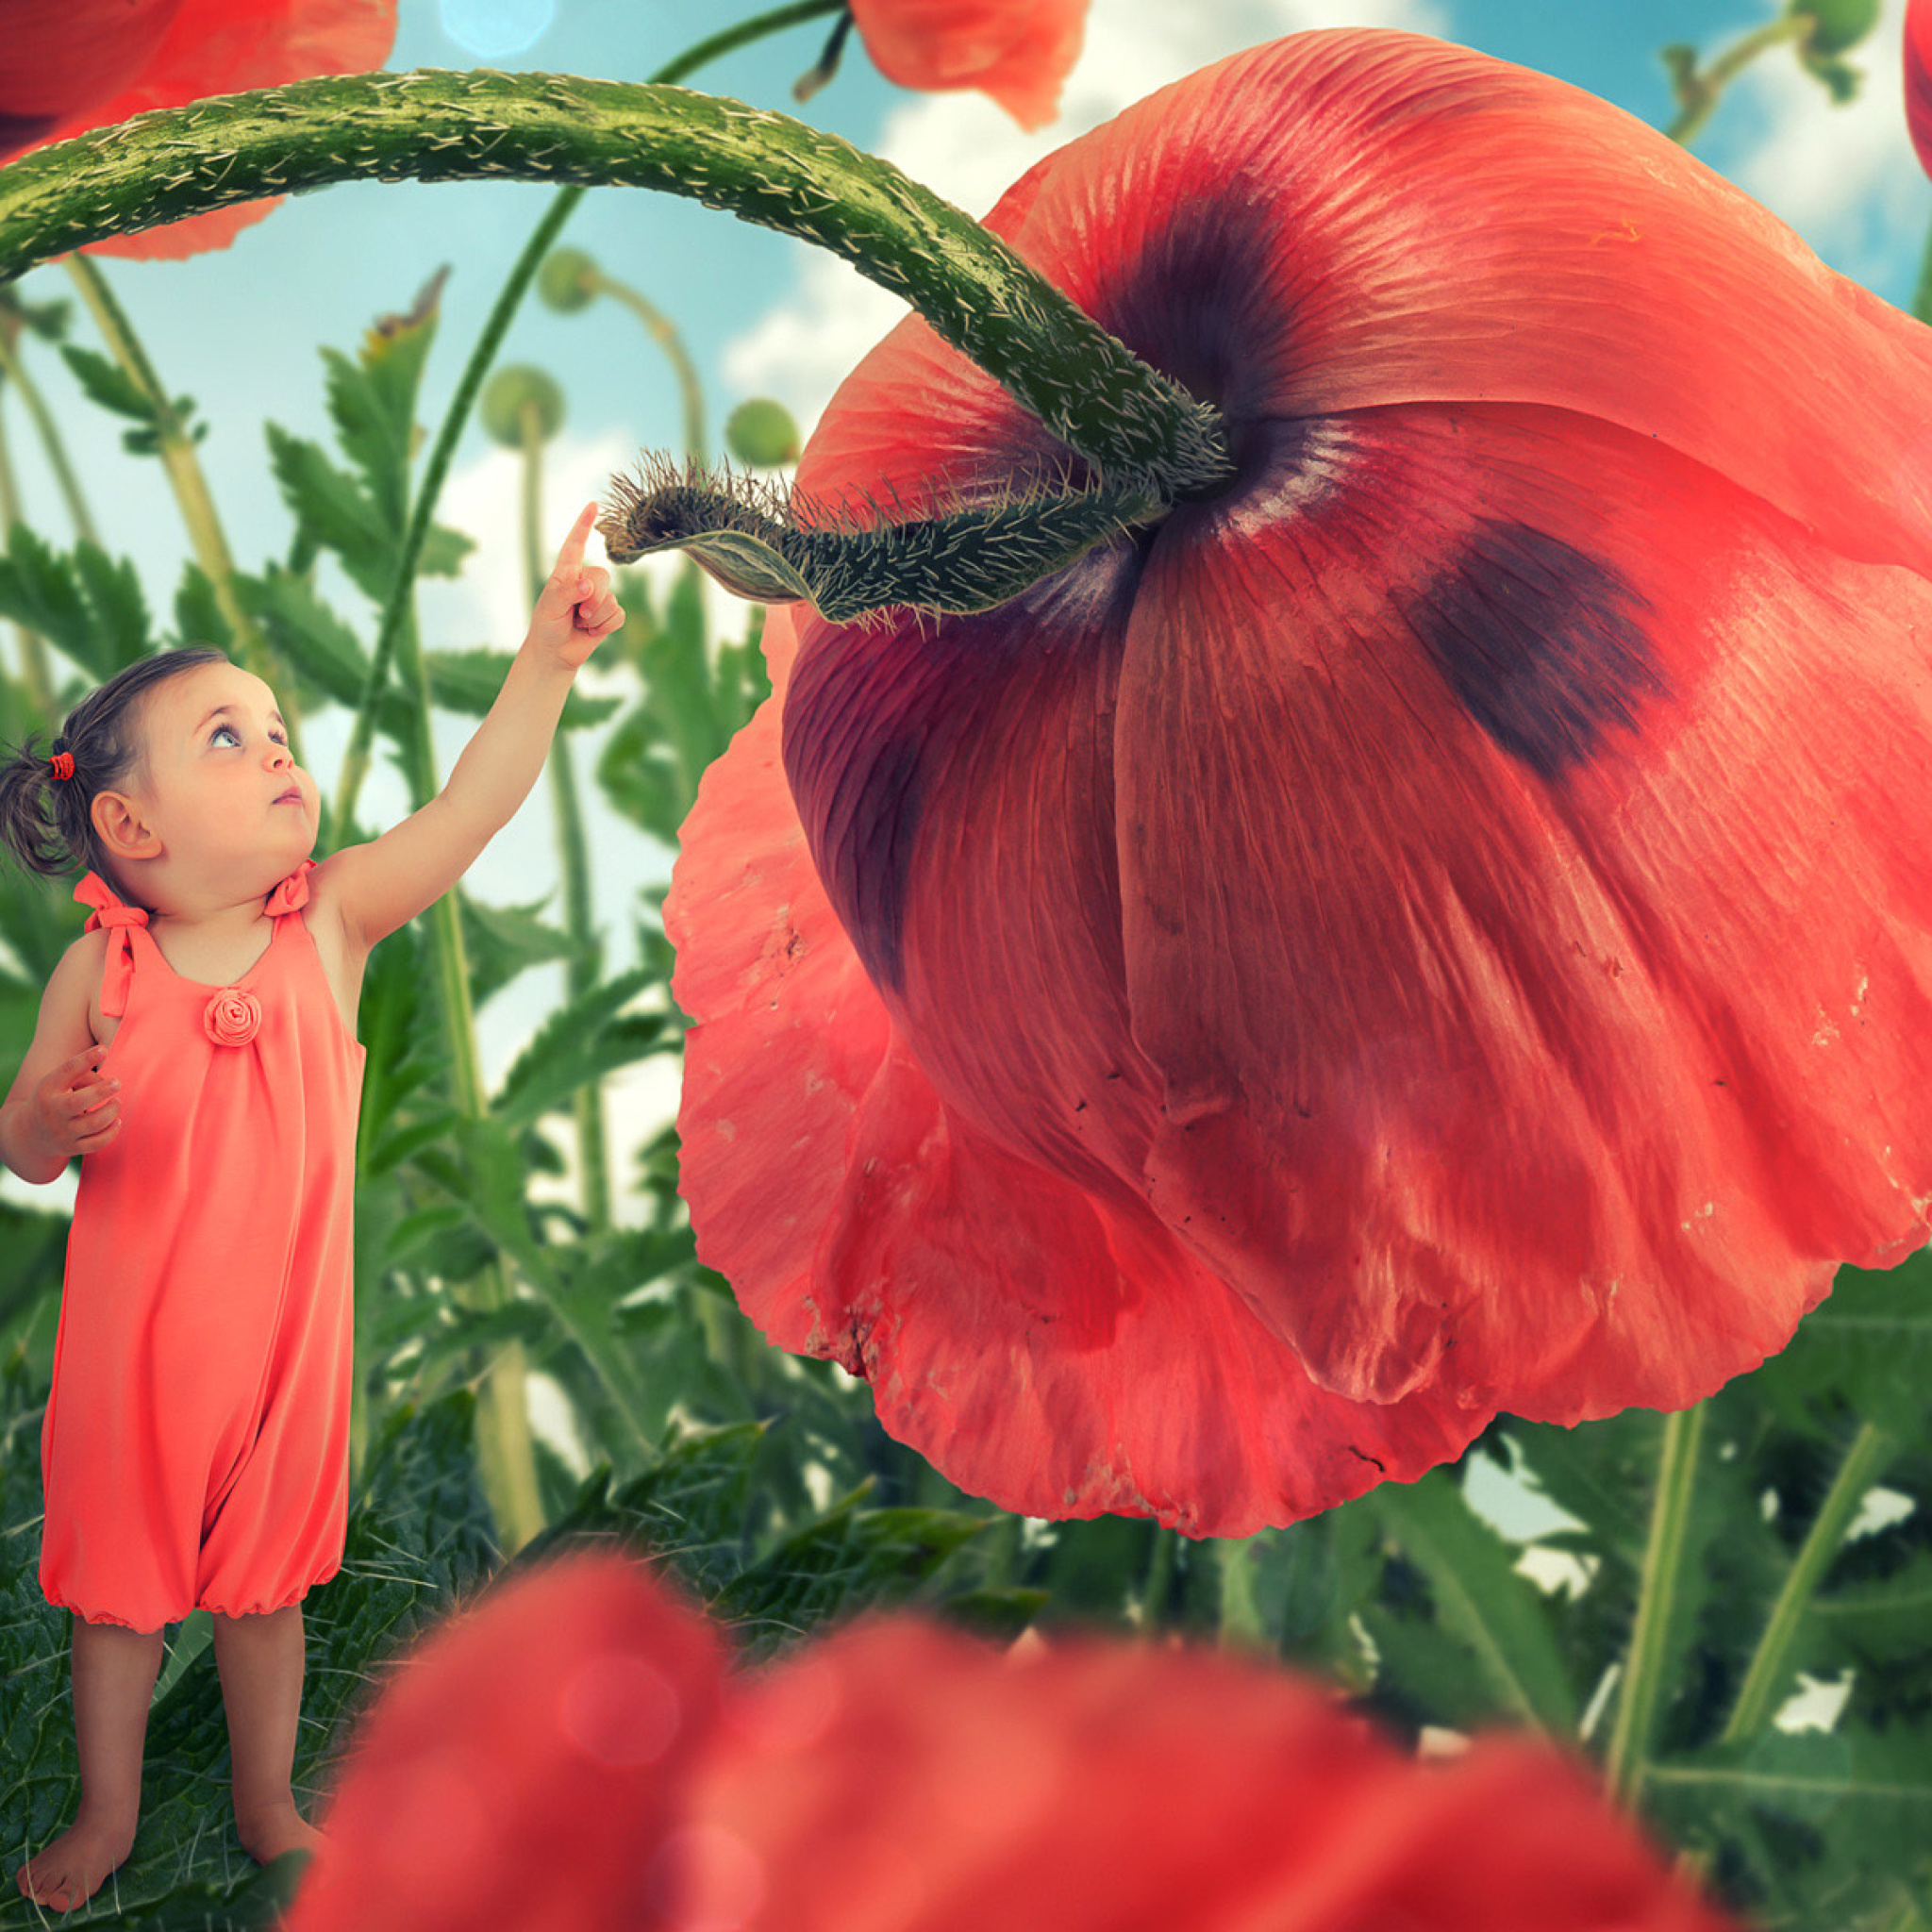 Little kid on poppy flower wallpaper 2048x2048